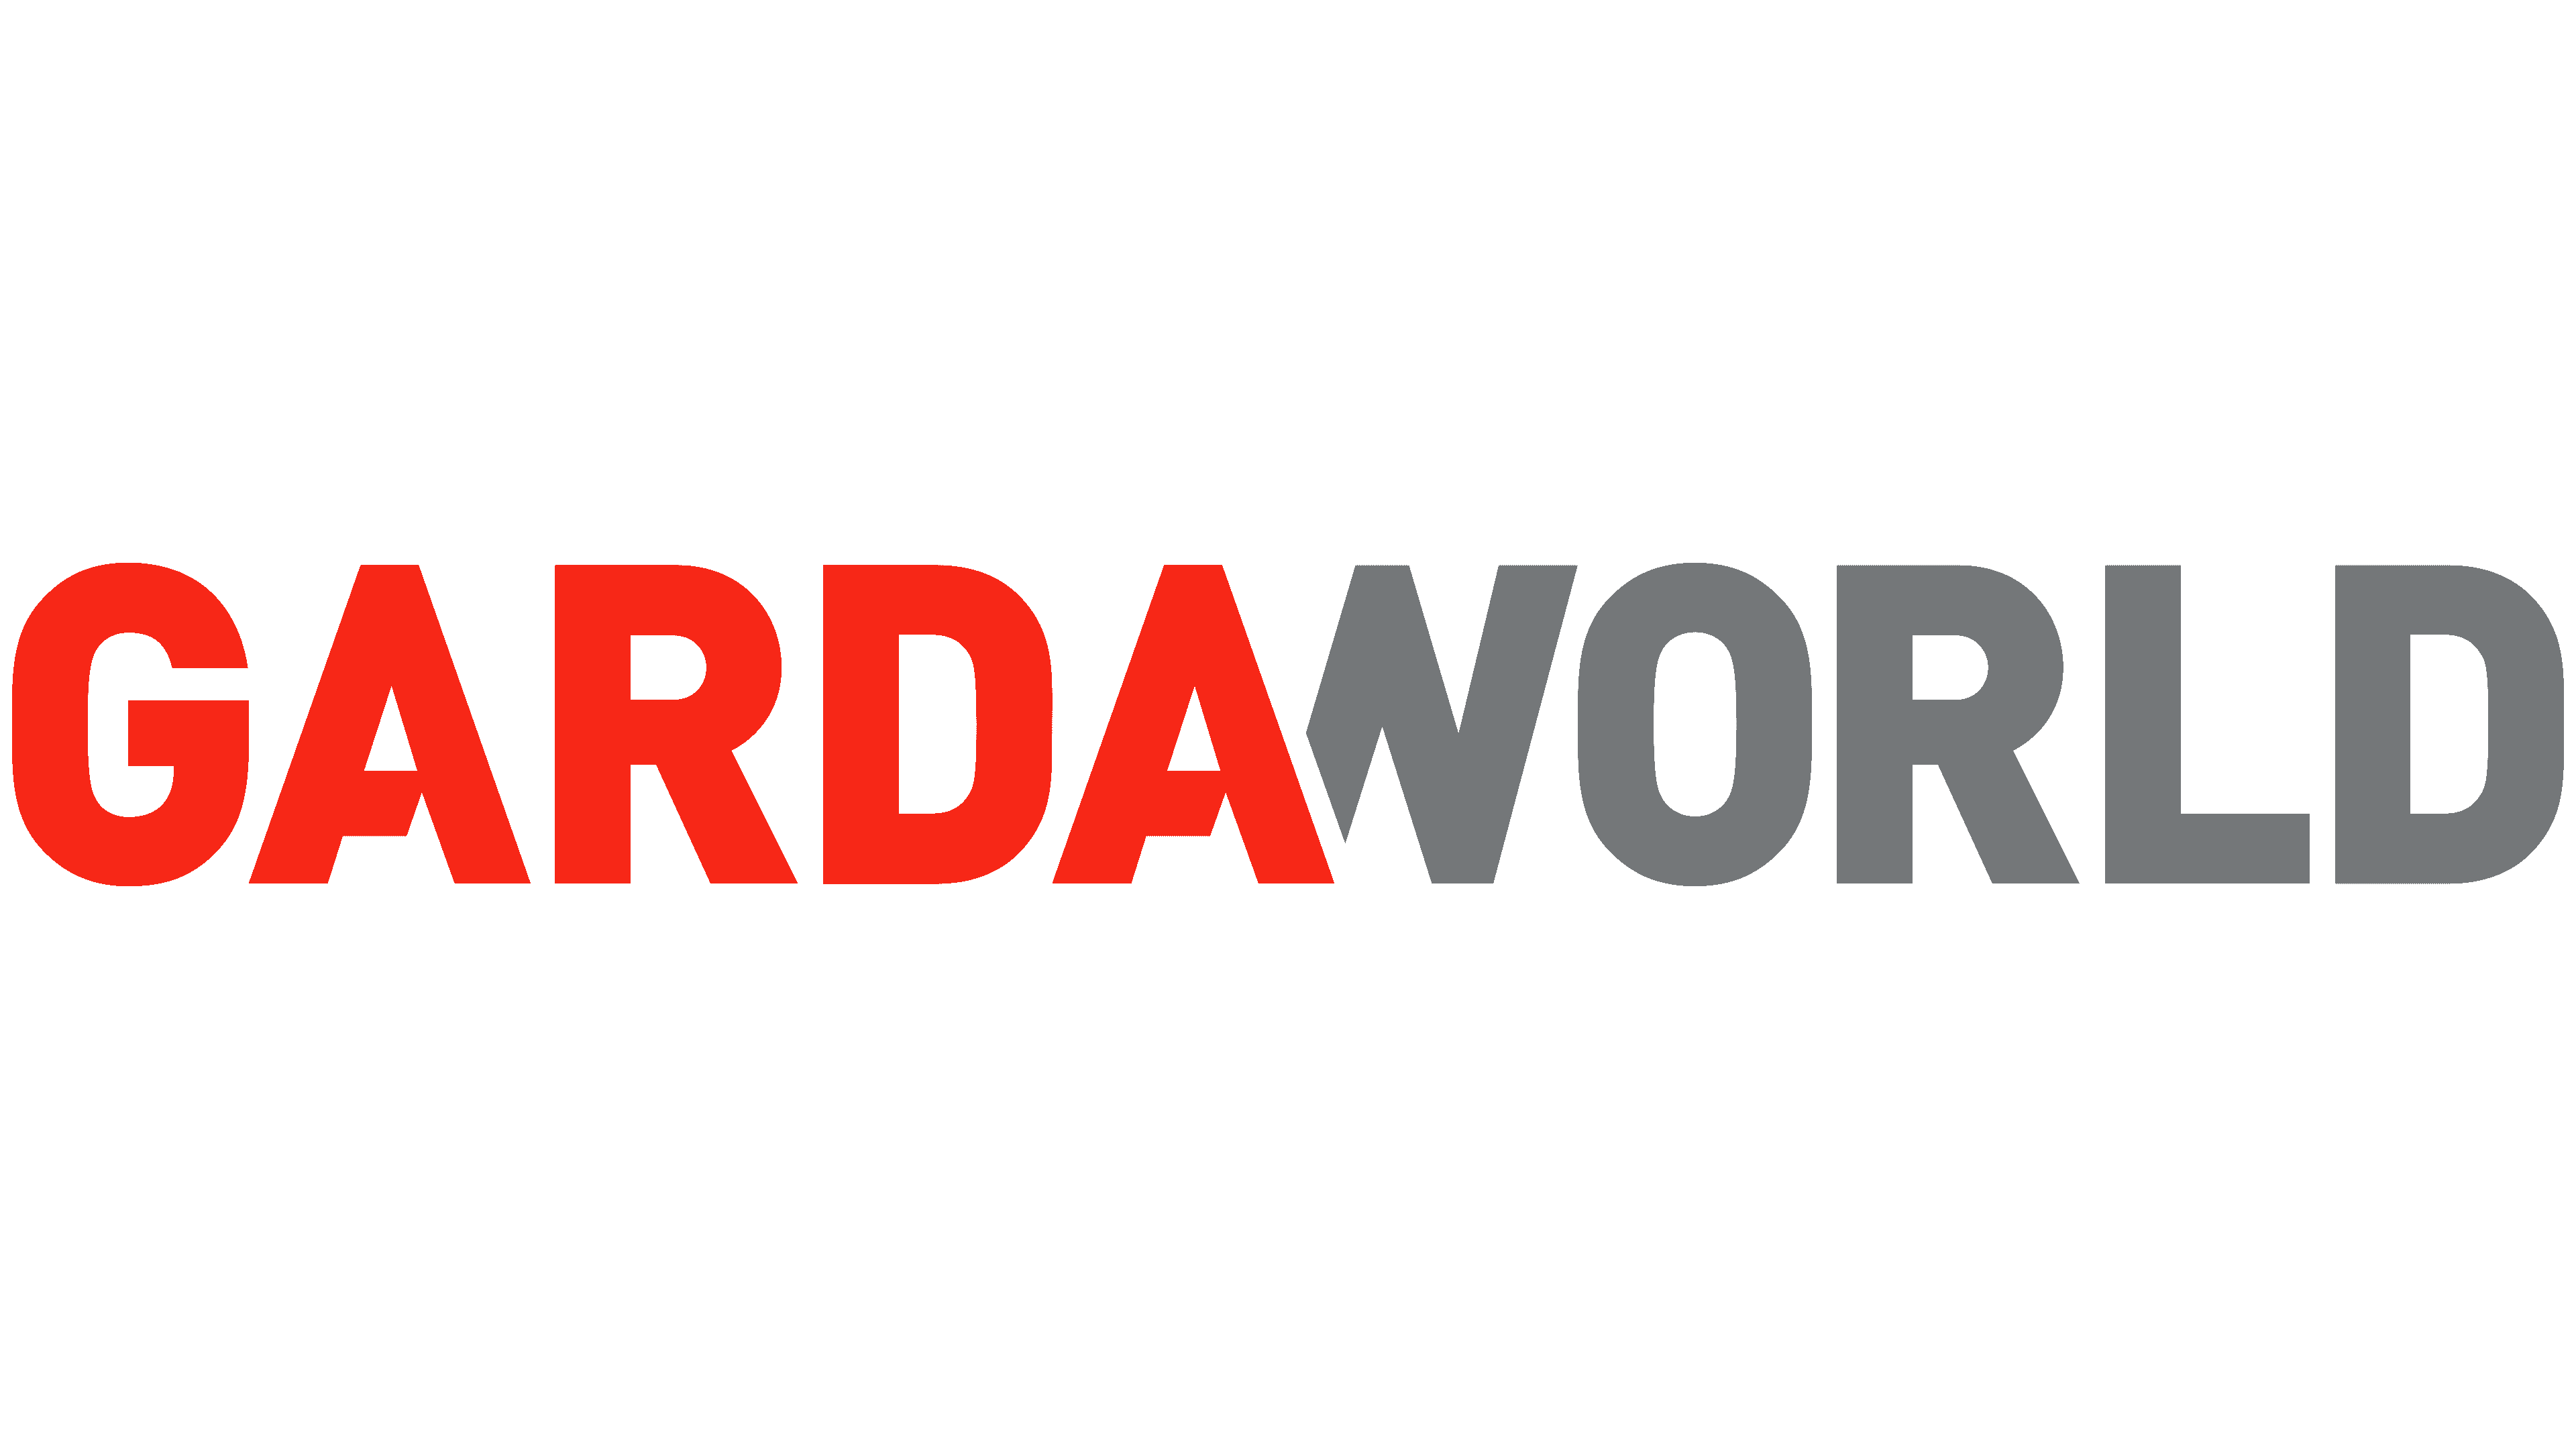 Gardaworld-Logo